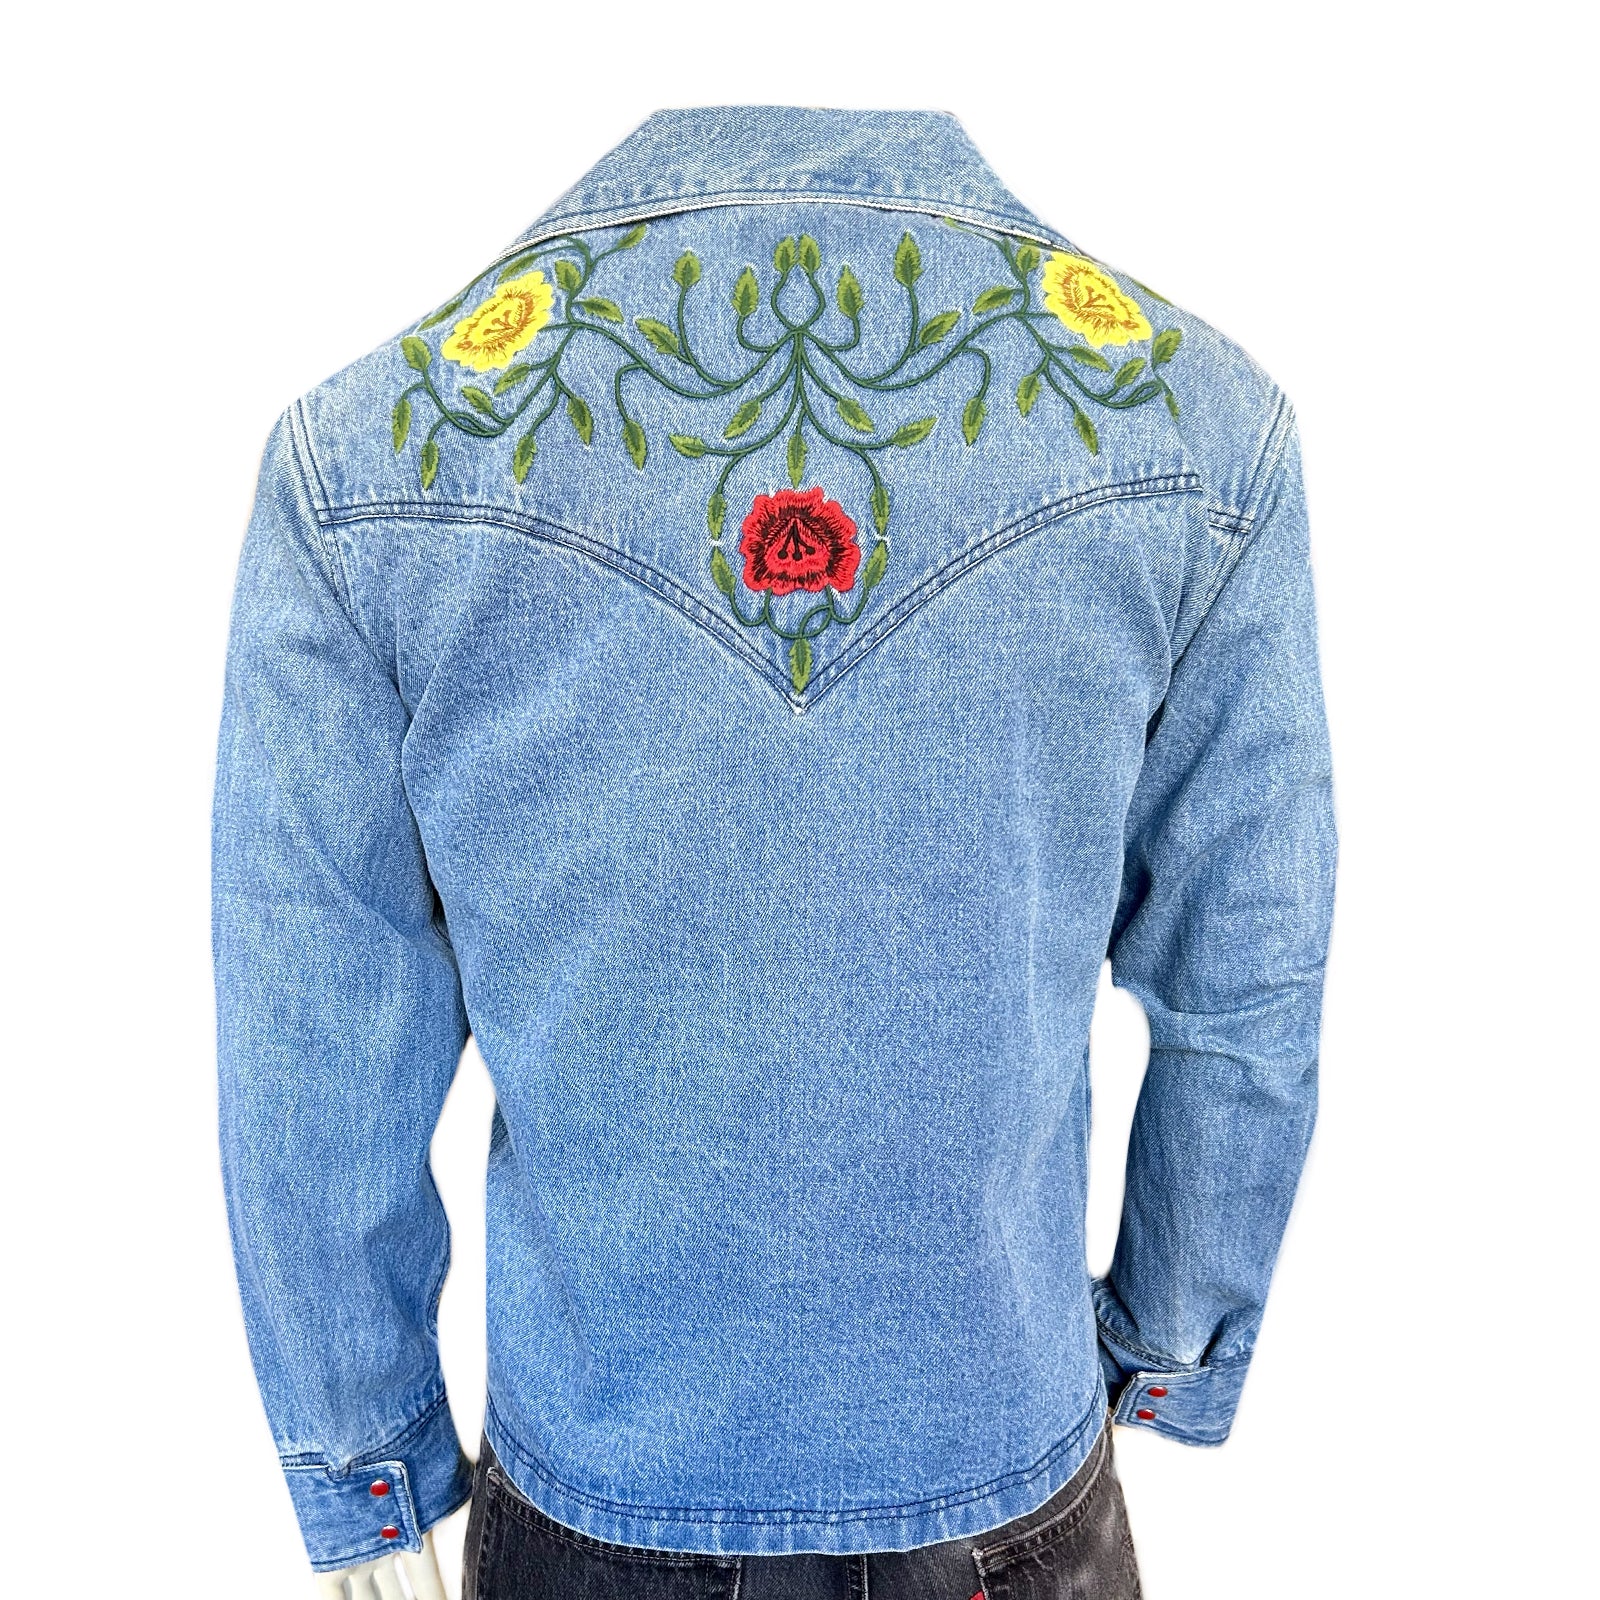 Unisex Vintage Western Denim Bolero Jacket with Floral Embroidery